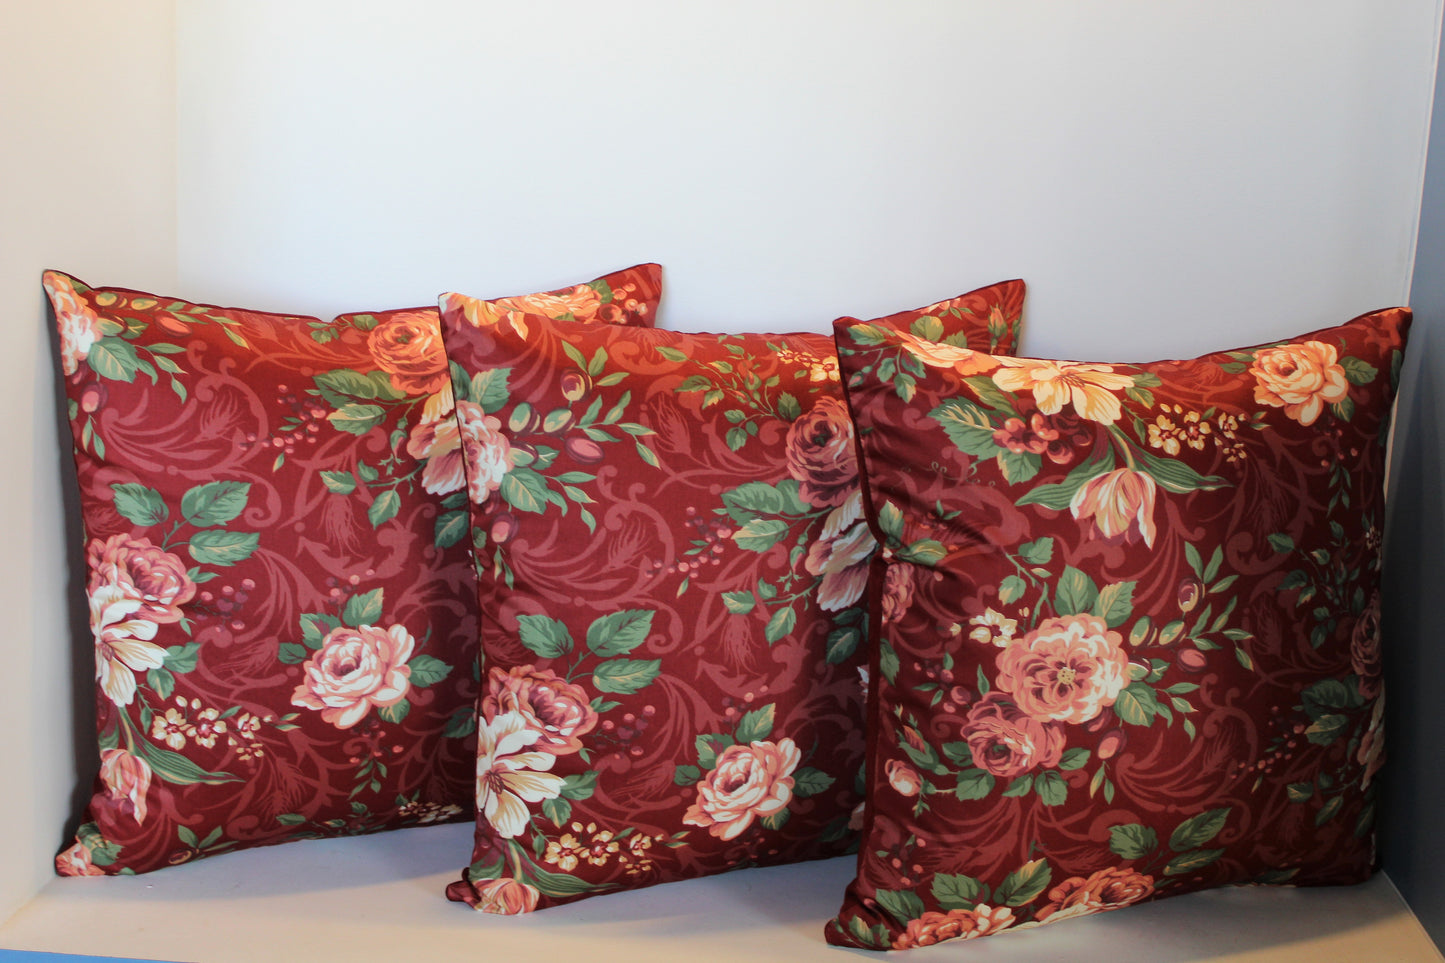 Rosso Corsa Roses - Cushion cover - 50cm x 50cm